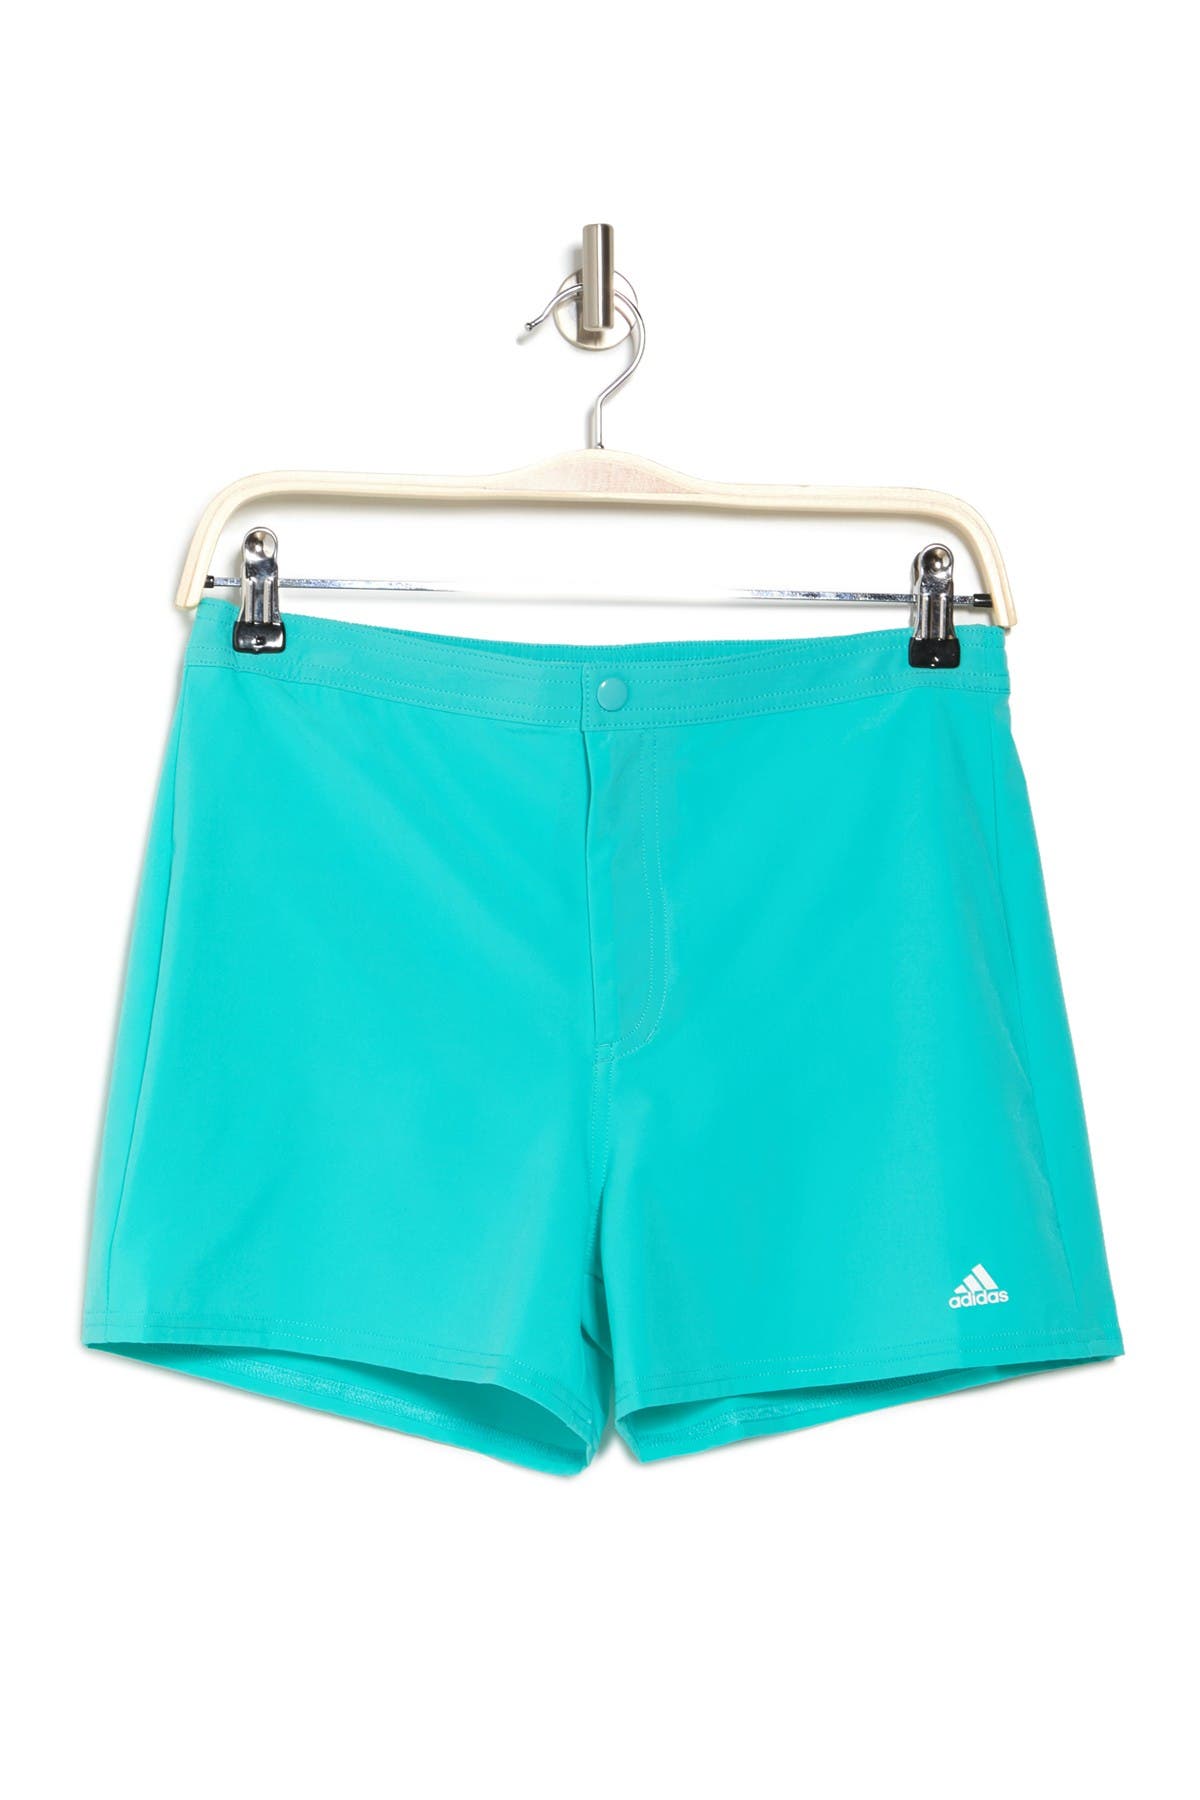 adidas woven swim shorts